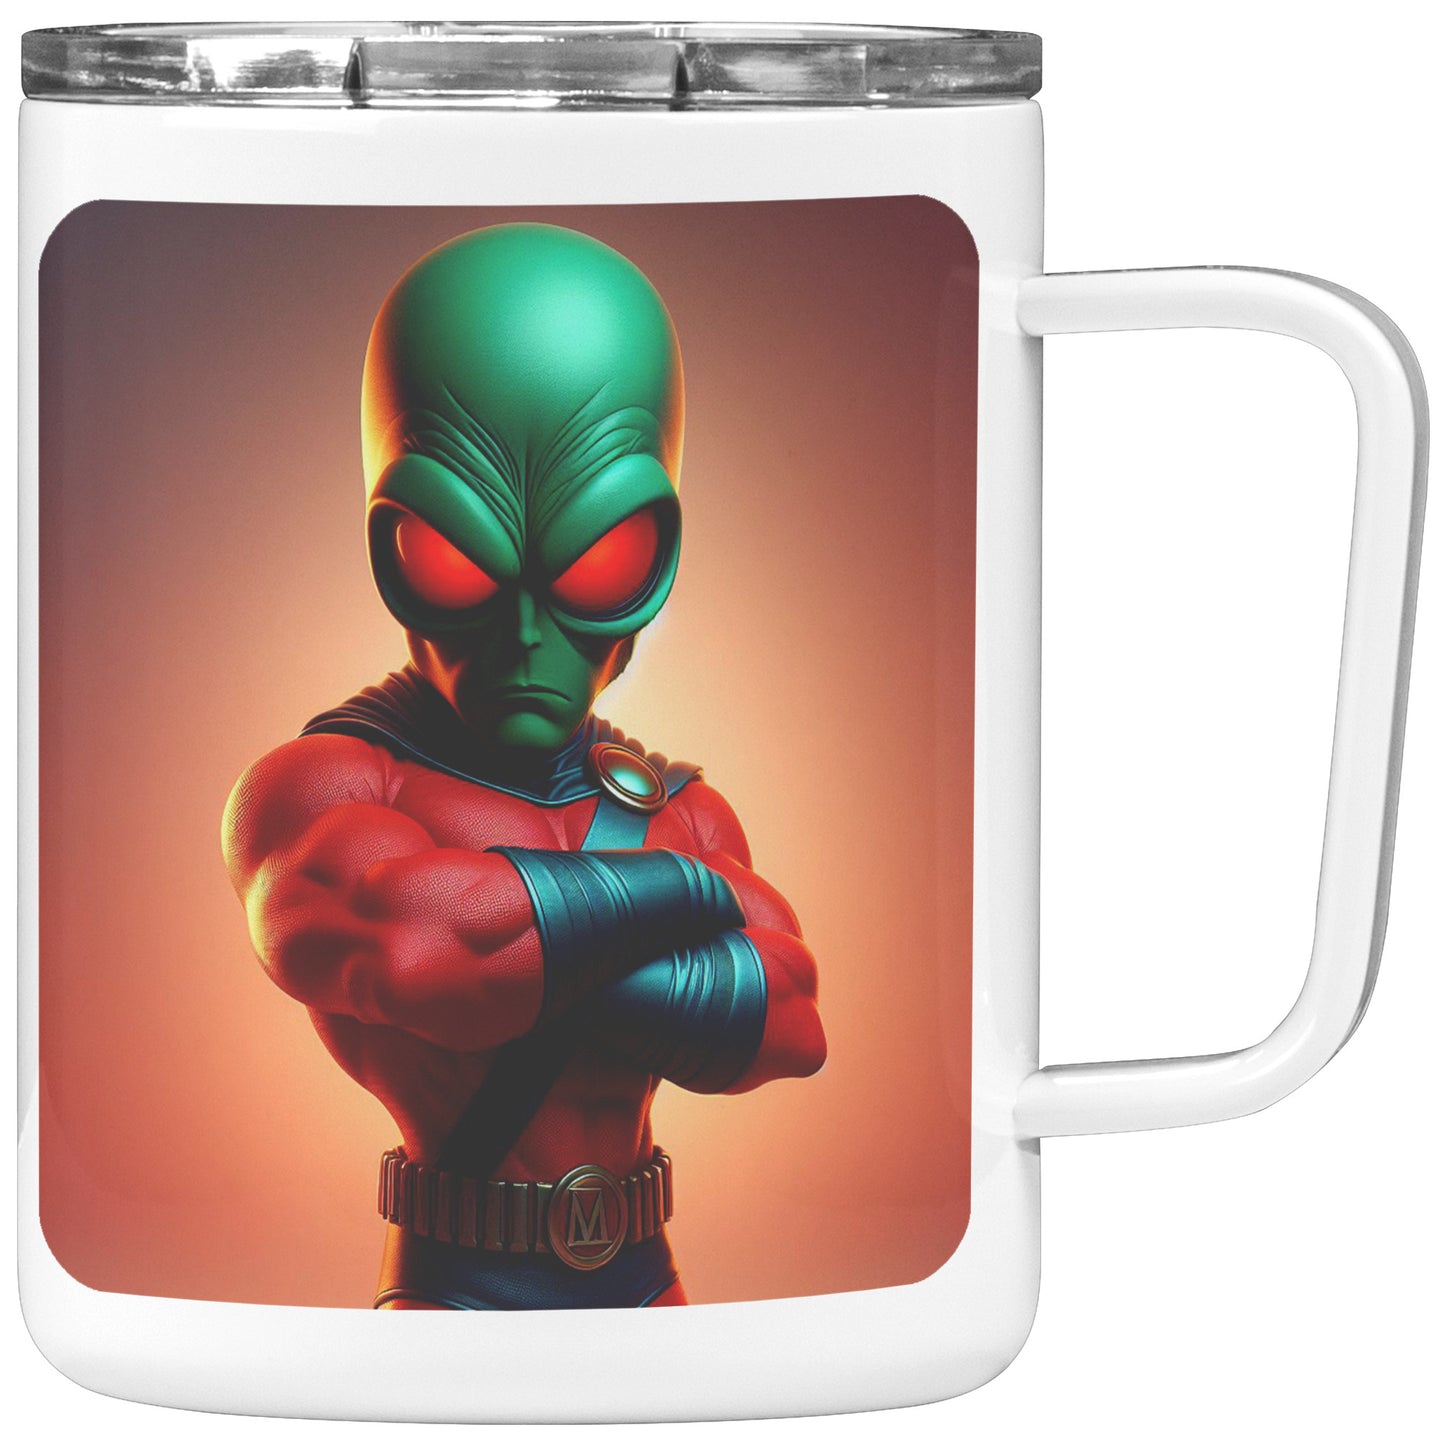 Martian Alien Caricature - Coffee Mug #14